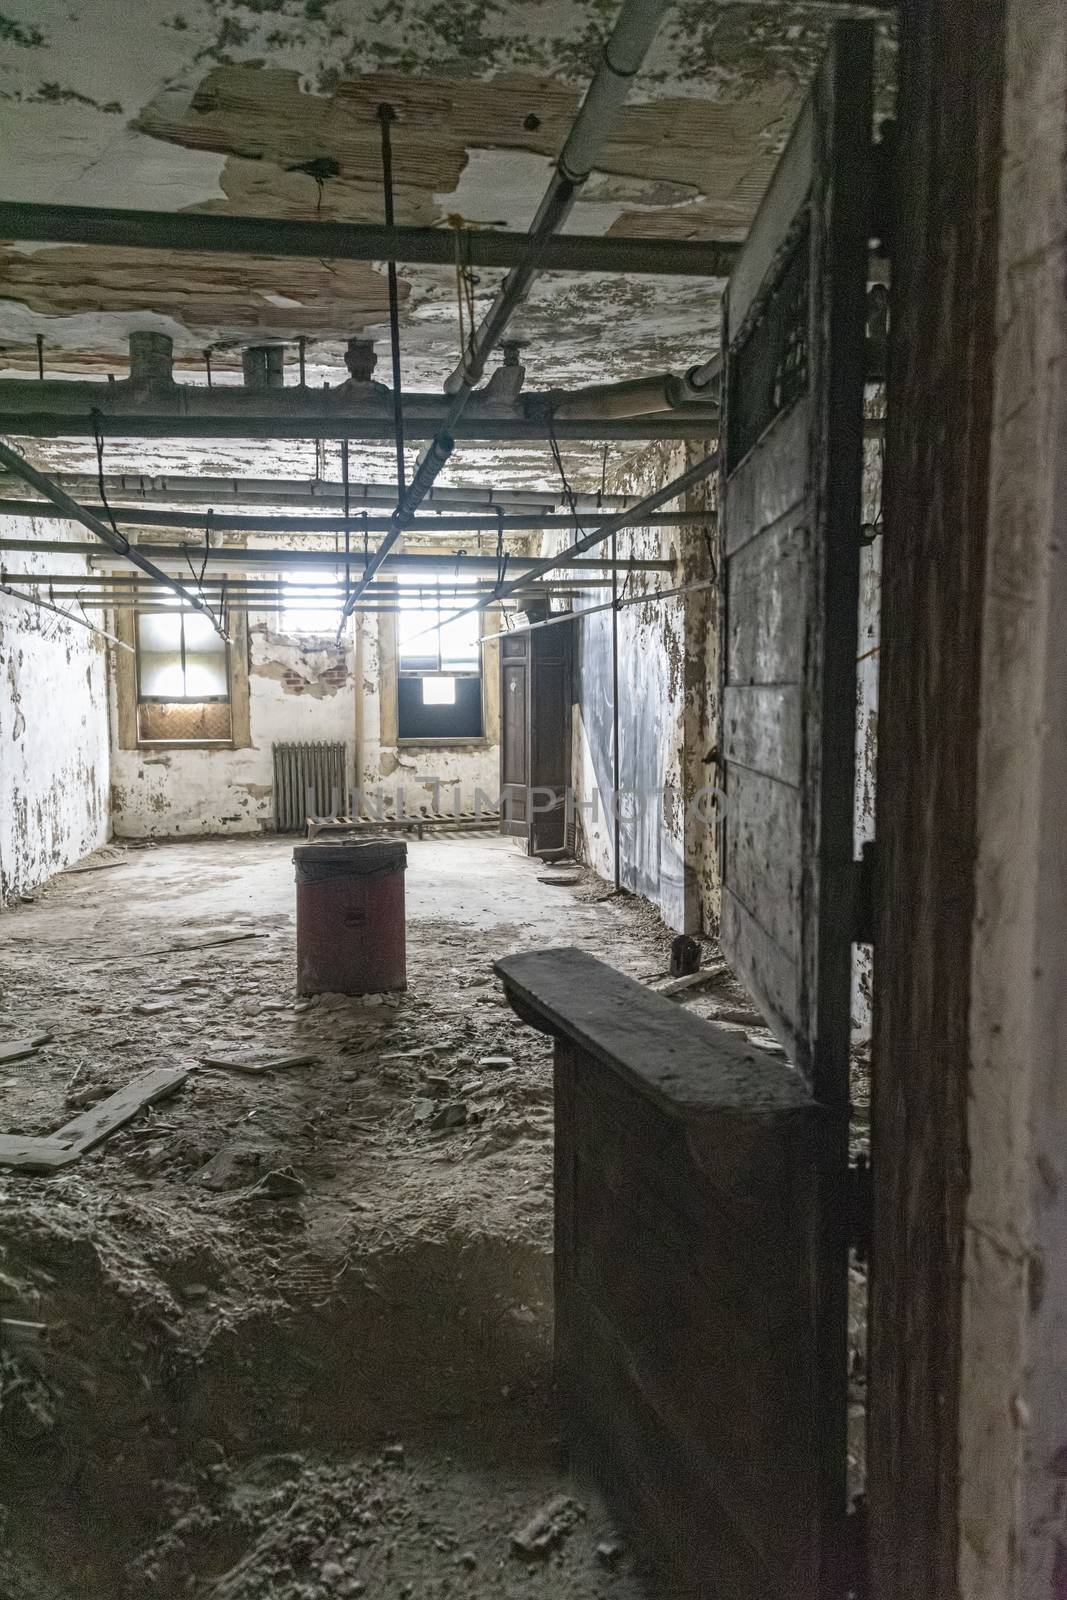 USA, New York, Ellis Island - May 2019: Ruined room with stable door in Ellis Island Hospital